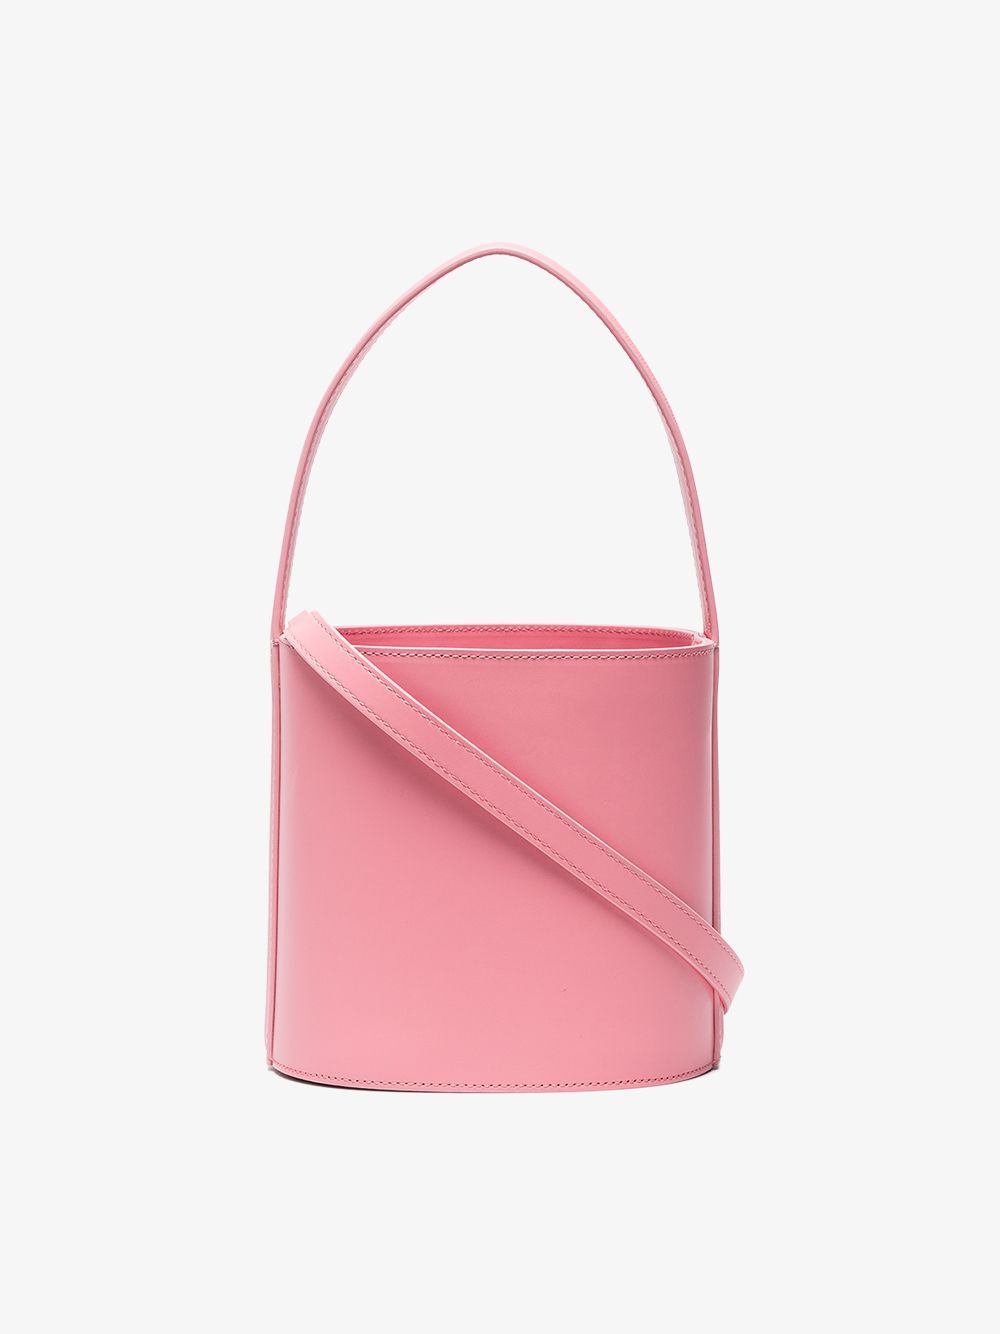 Staud pink Bisset leather bucket bag | Browns Fashion